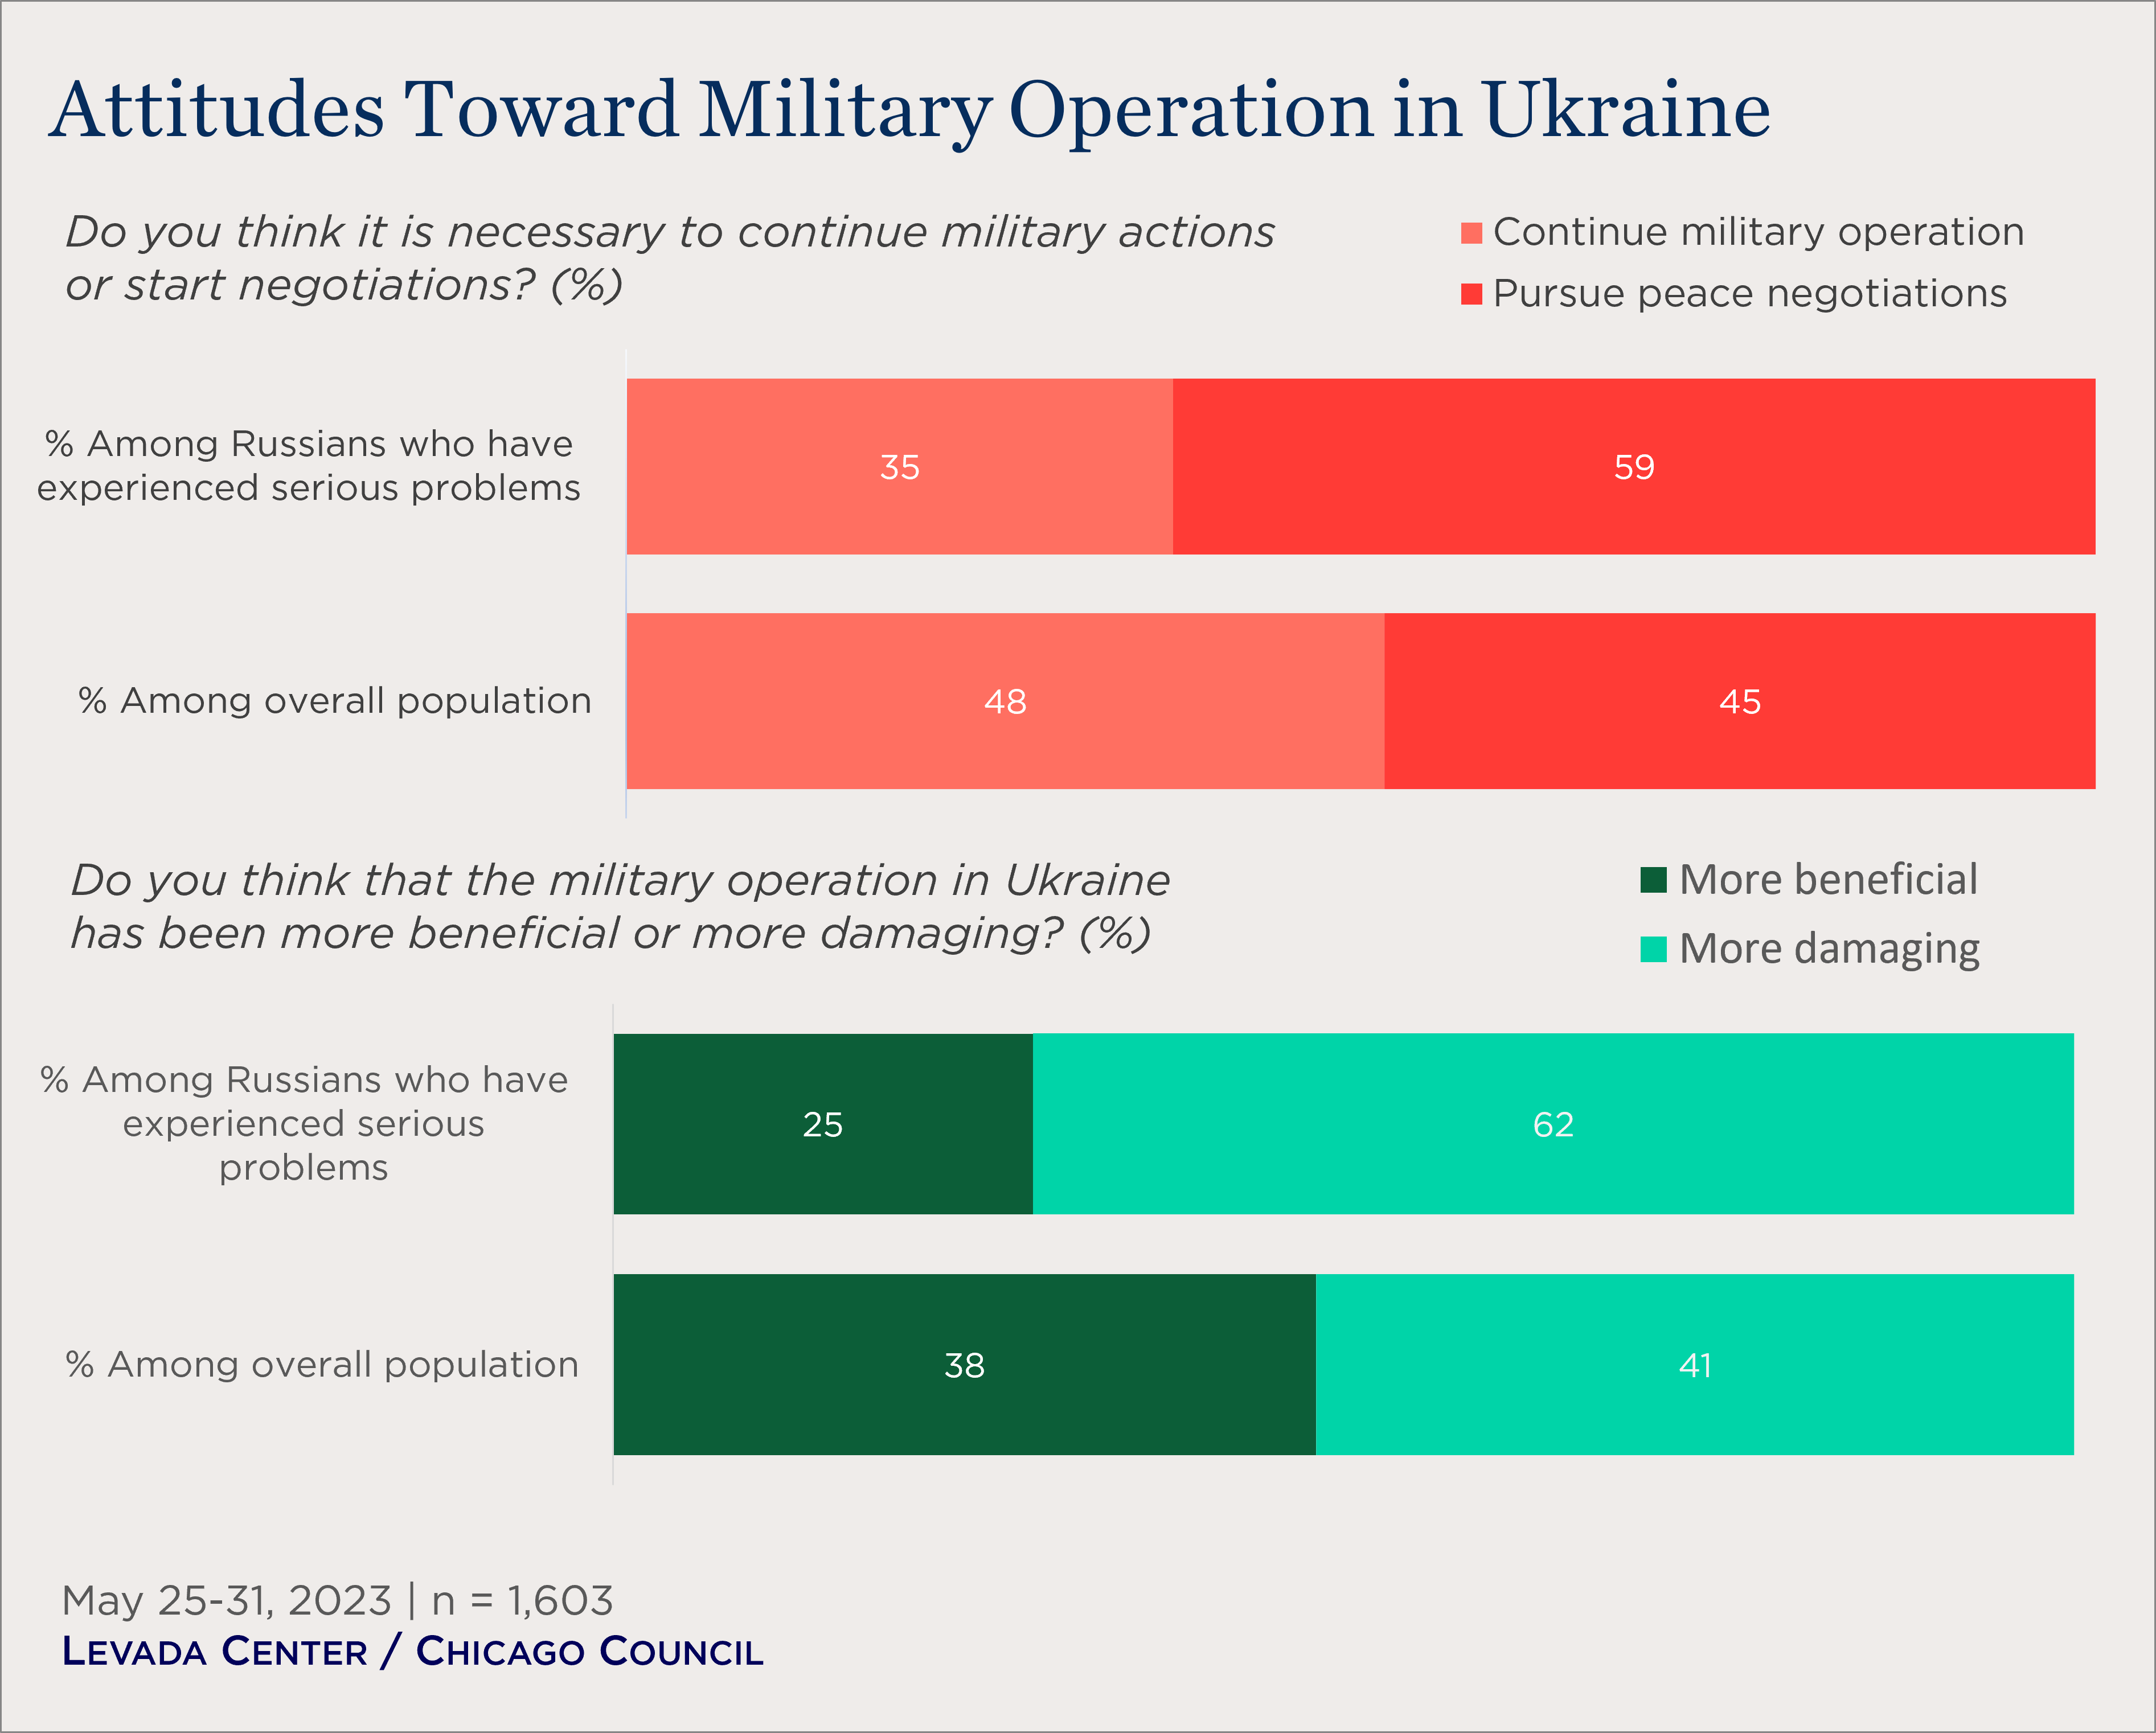 "bar chart showing attitudes toward military operation in Ukraine"